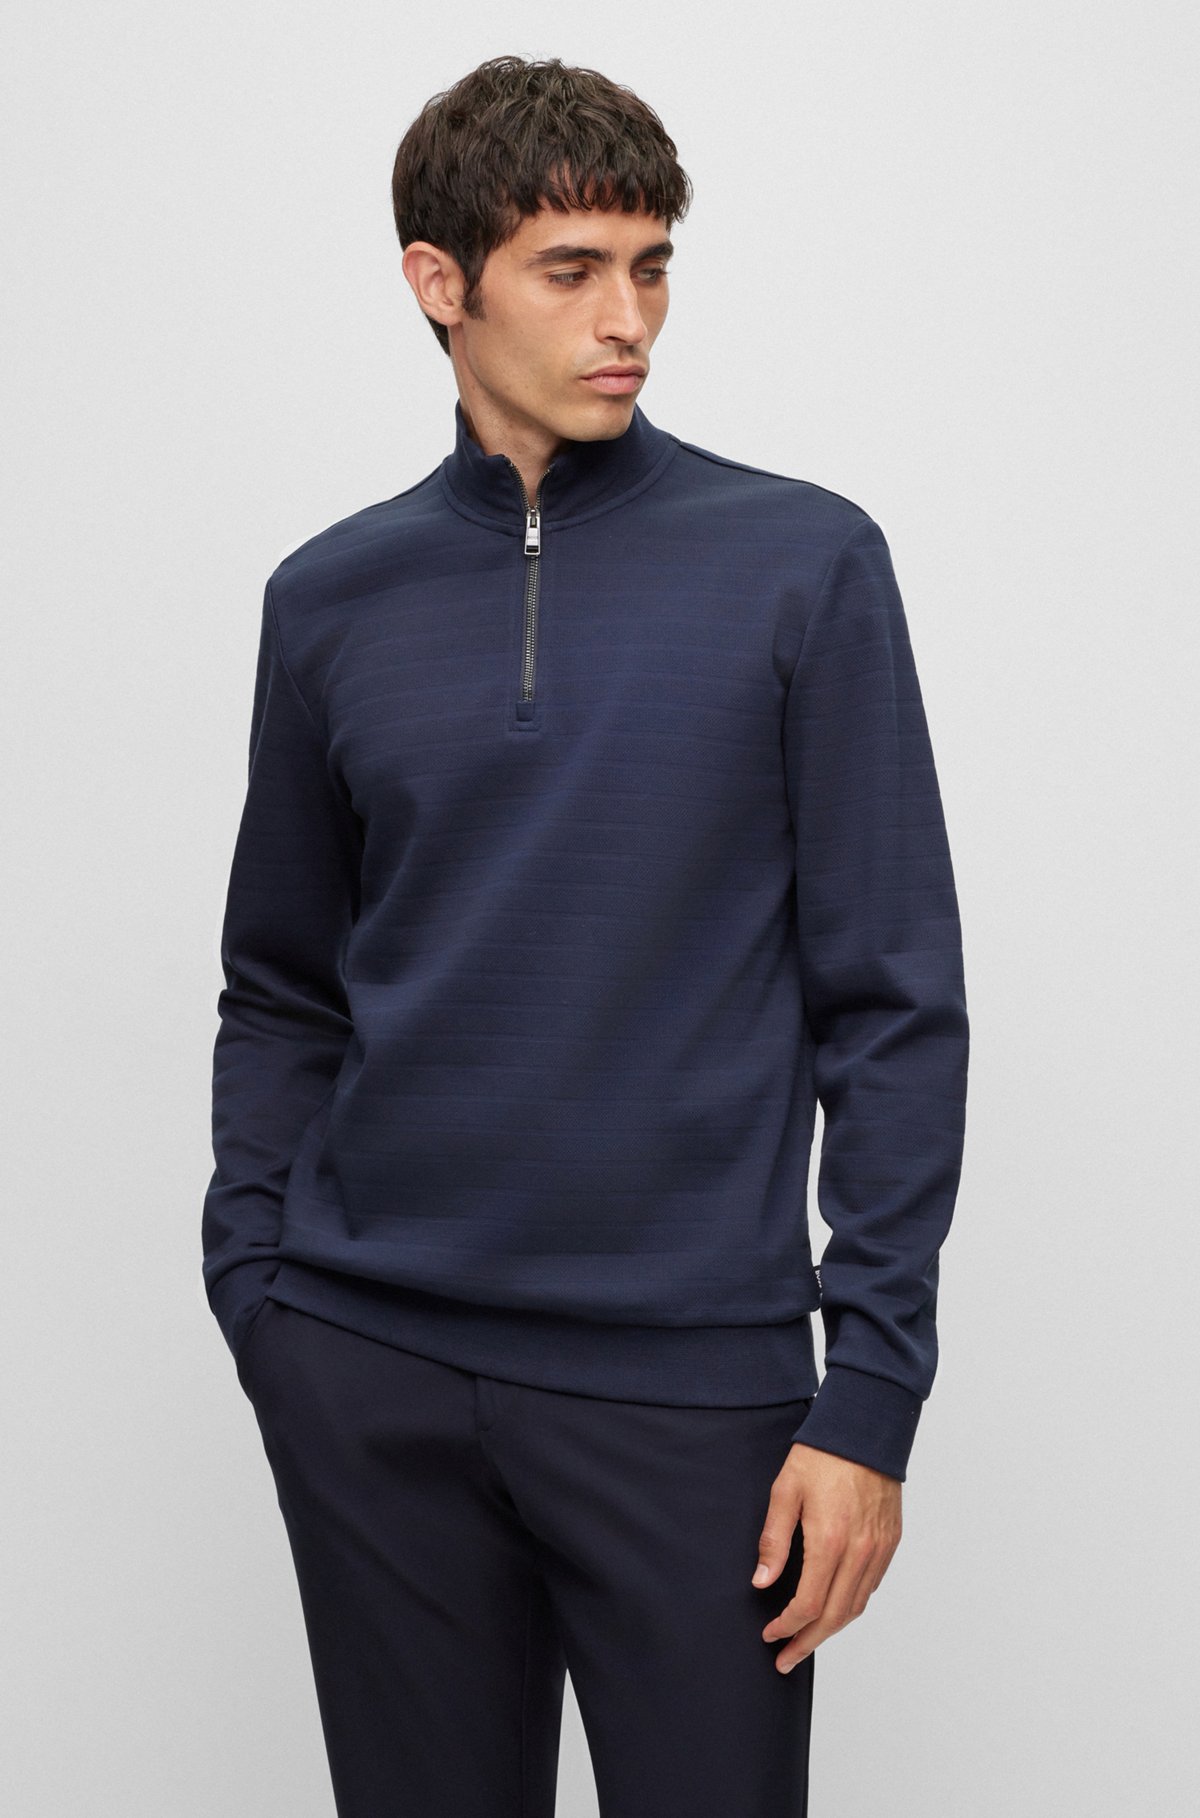 cotton Zip-neck in - jacquard BOSS mercerized sweatshirt